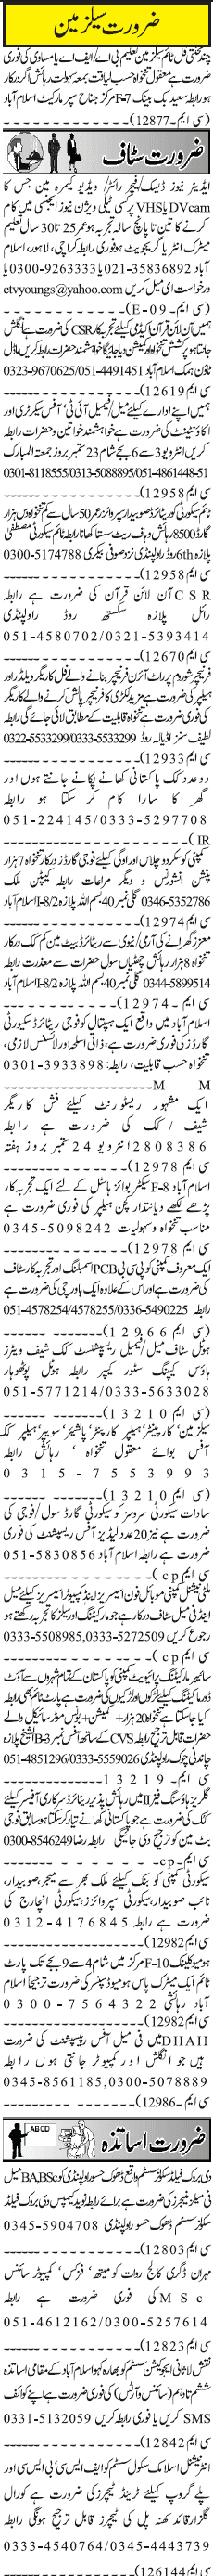 Misc. Jobs in Jang Rawalpindi Classified